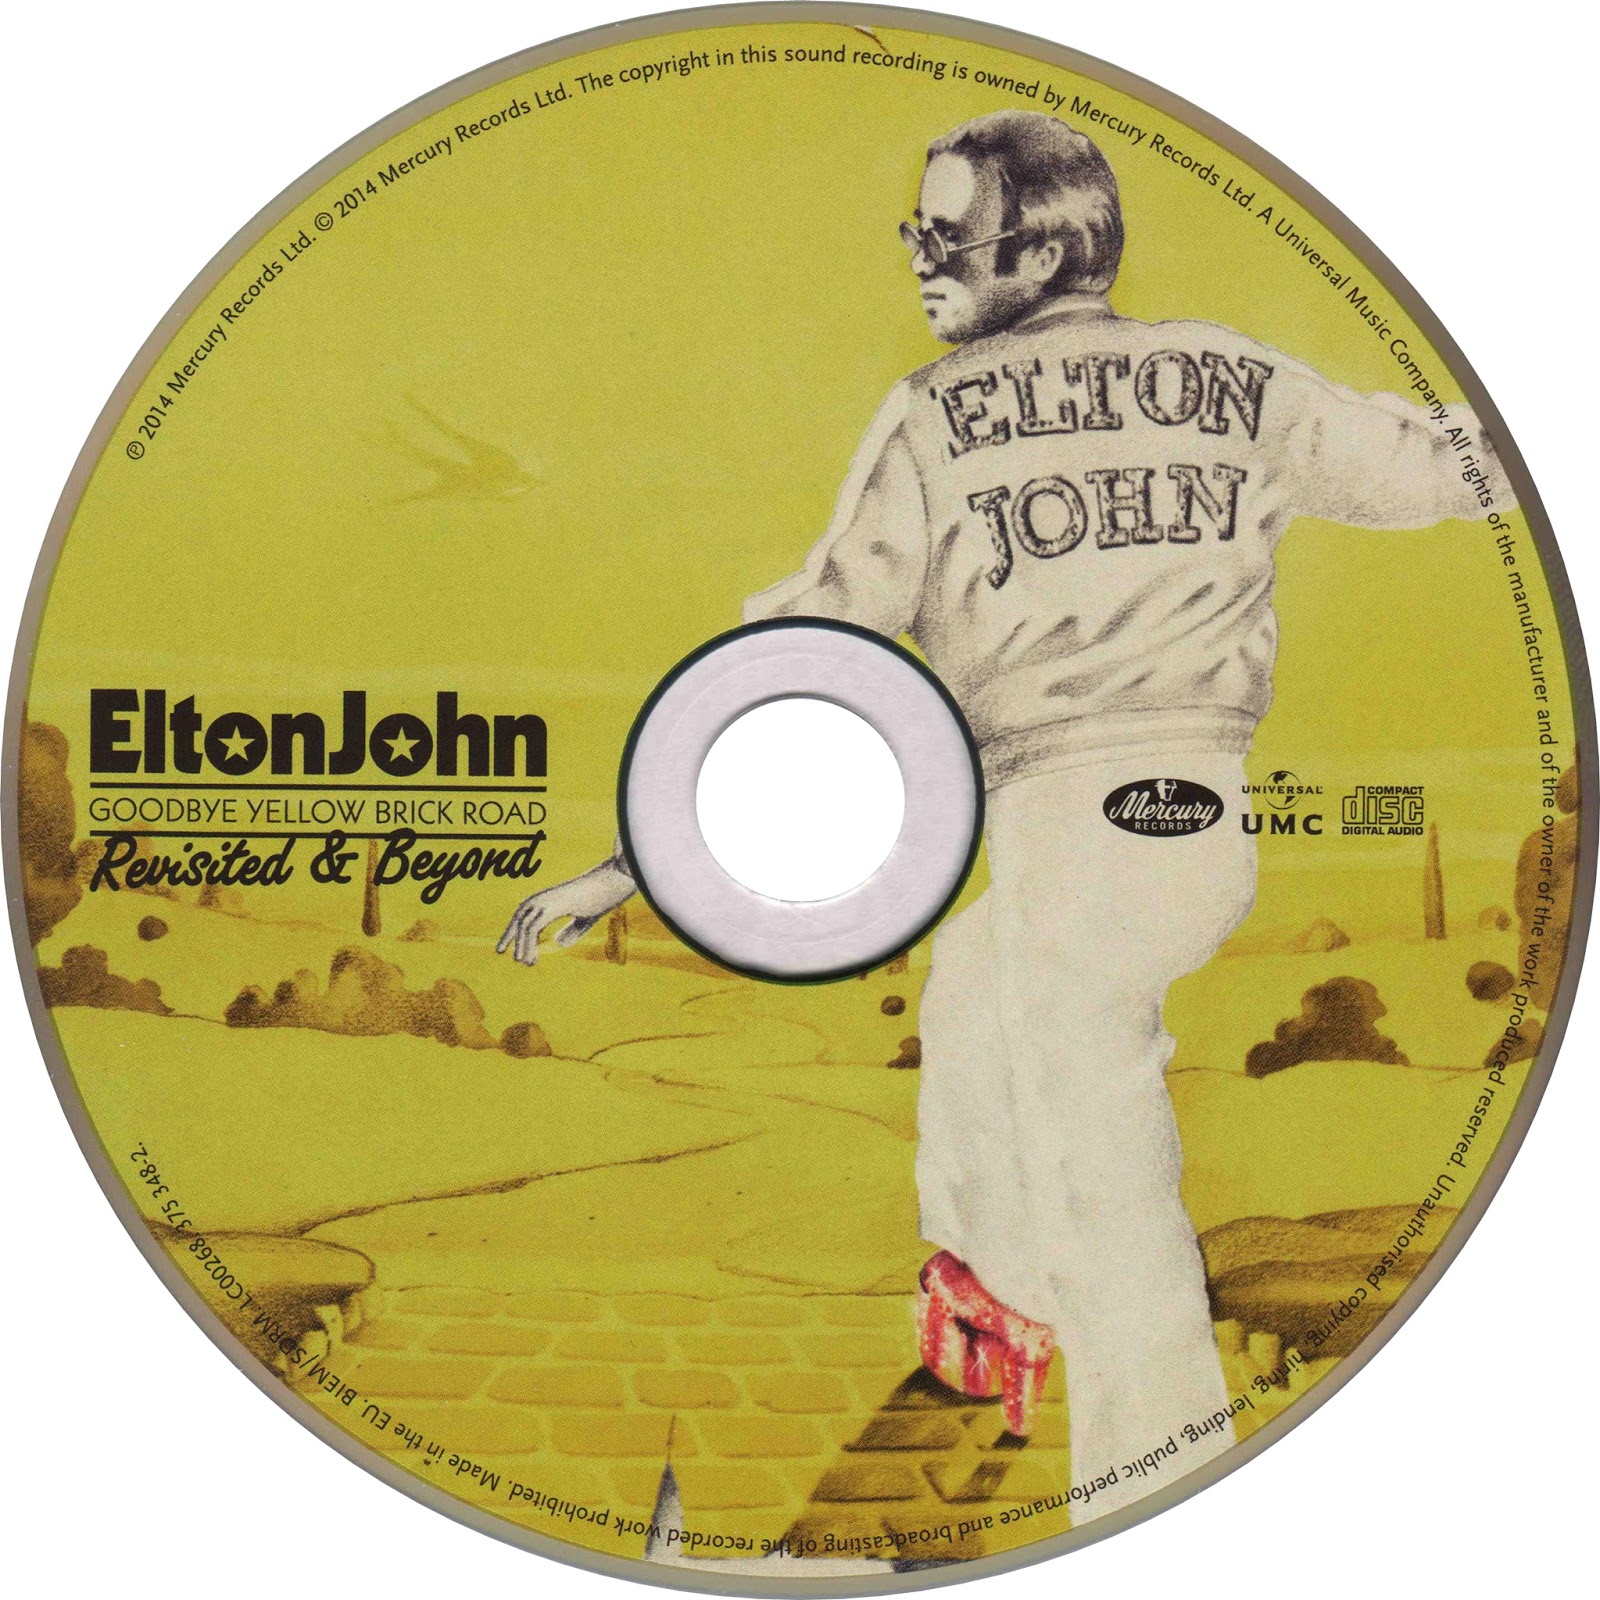 Cd roads. Elton John Goodbye Yellow Brick Road 1973. Elton John 1973. Elton John 1973 album. Elton John 1973 Goodbye Yellow Brick Road обложка.